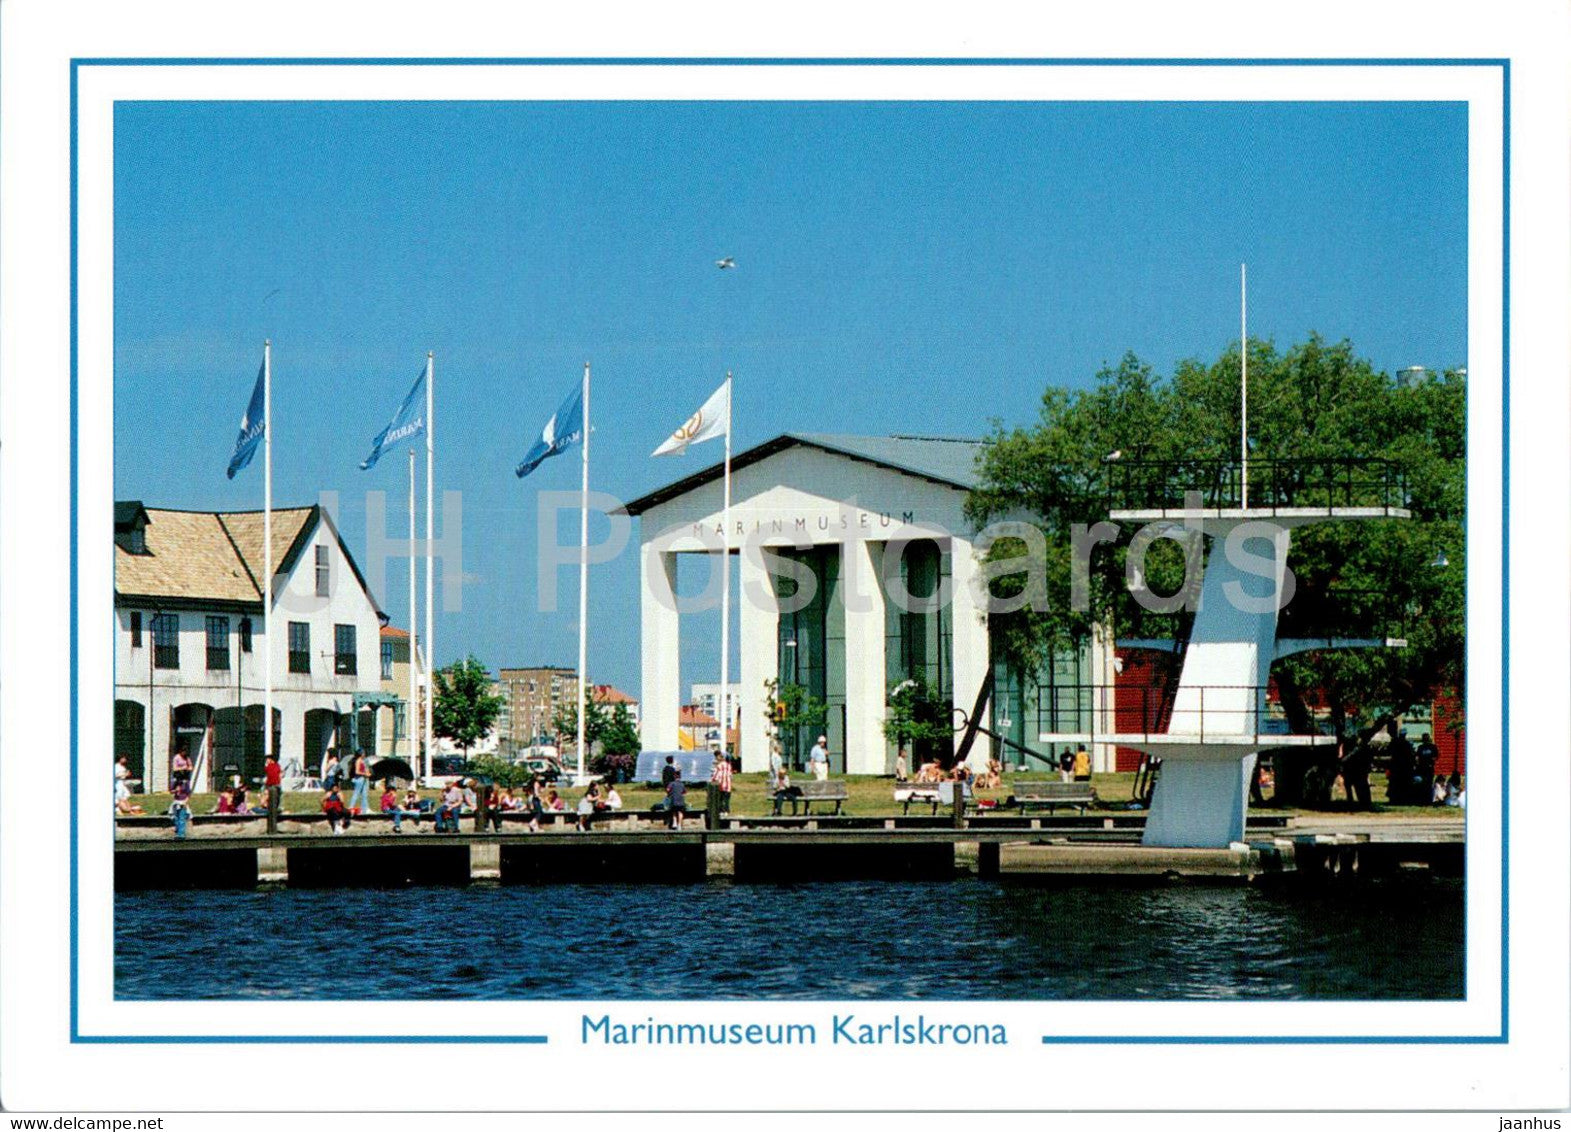 Marinmuseum Karlskrona - marine museum - 246 - Sweden - unused - JH Postcards